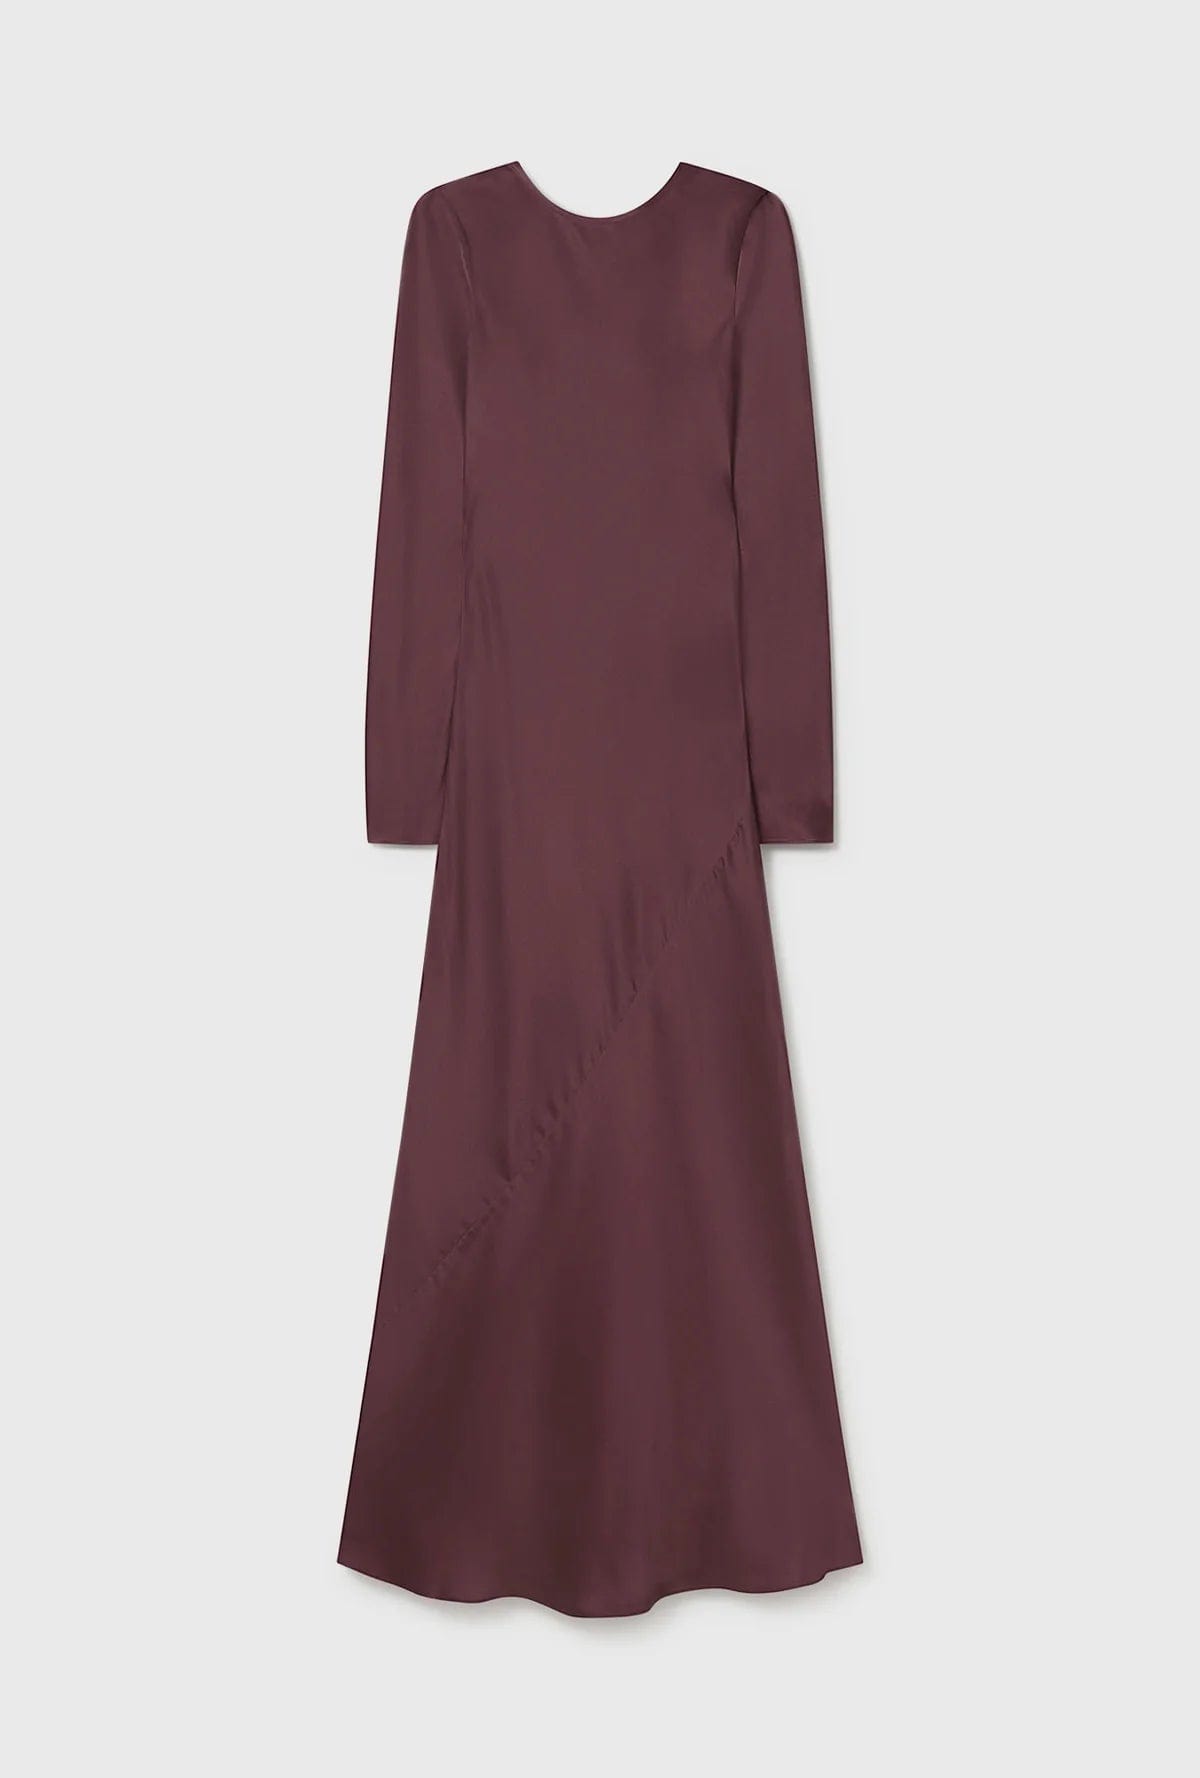 HAisTsiAH Dress Chocolate / Extra-Small The Full Long Sleeves Dress in Silk